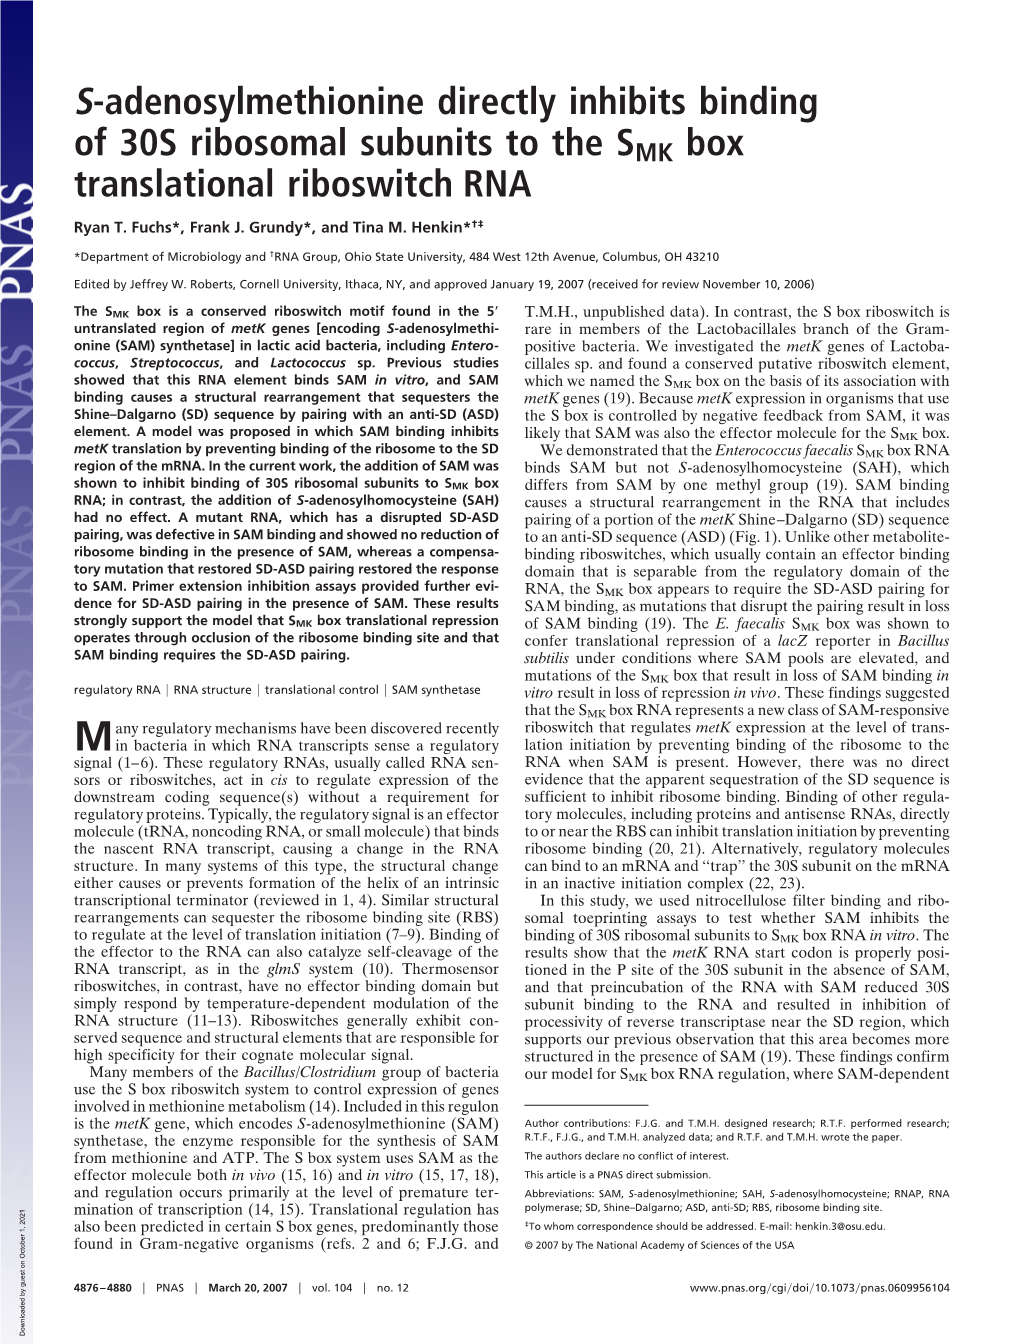 S-Adenosylmethionine Directly Inhibits Binding of 30S Ribosomal Subunits to the SMK Box Translational Riboswitch RNA